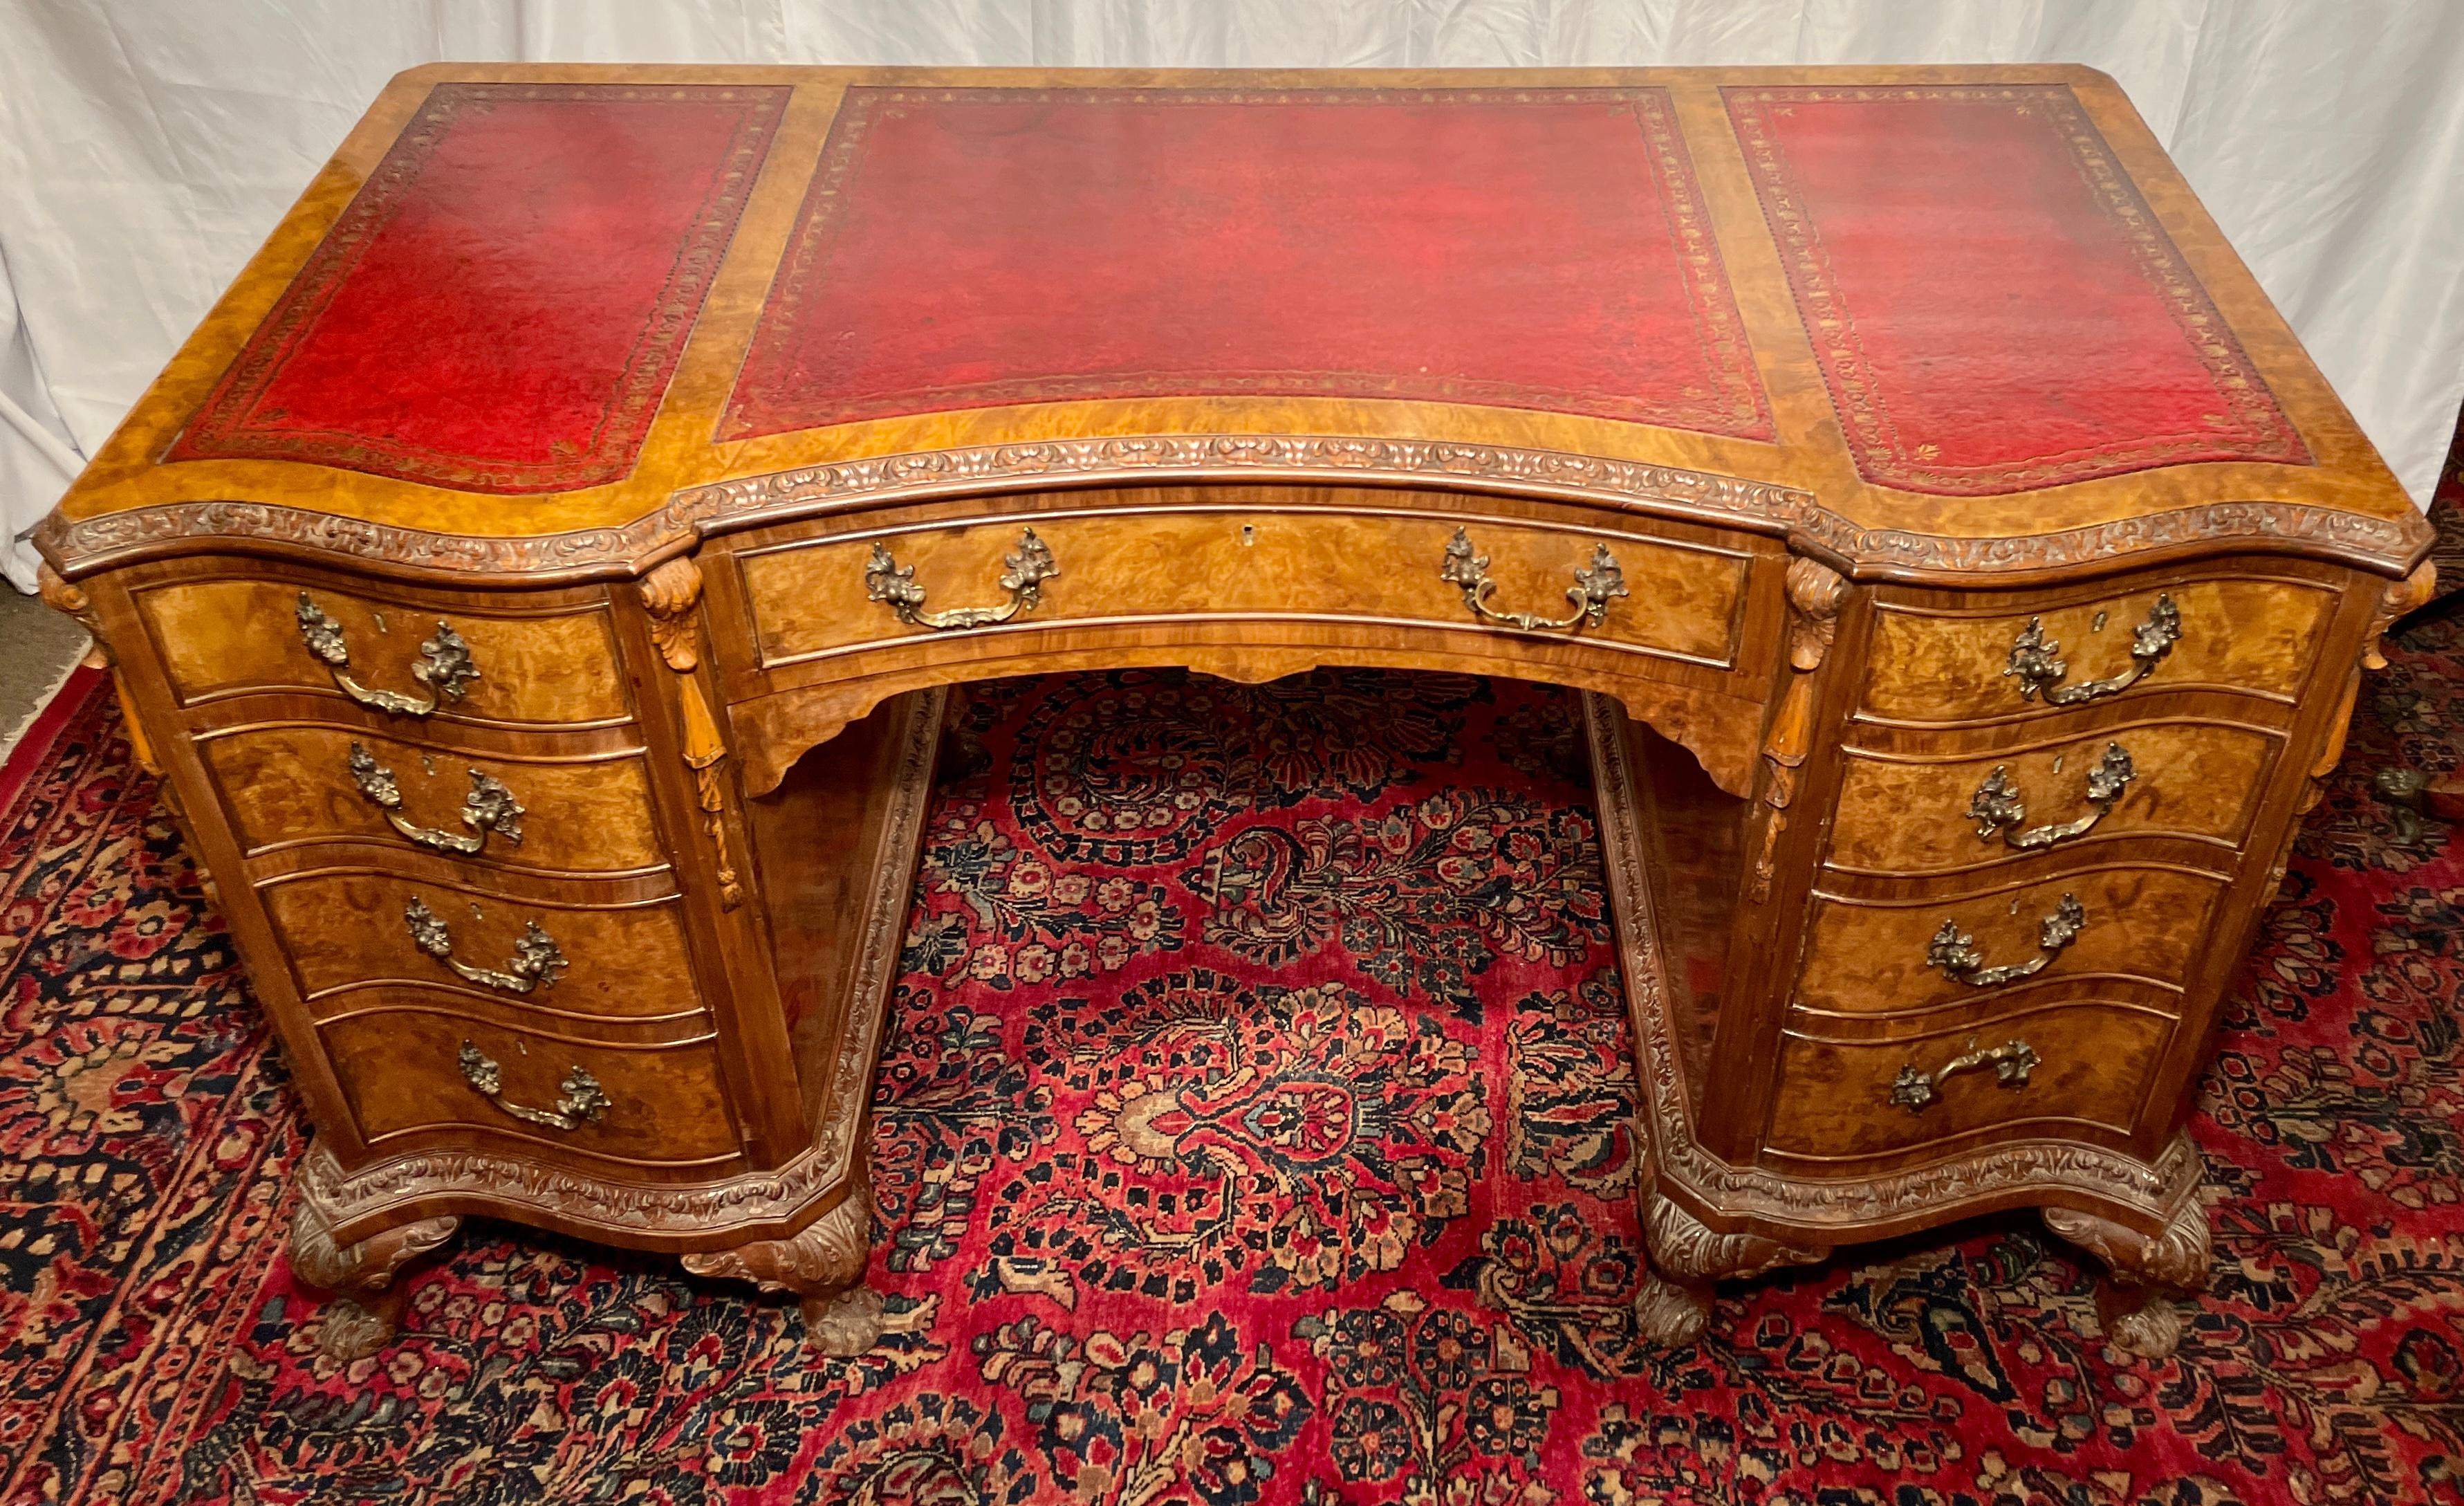 Antique English burled walnut leather top desk, circa 1880.